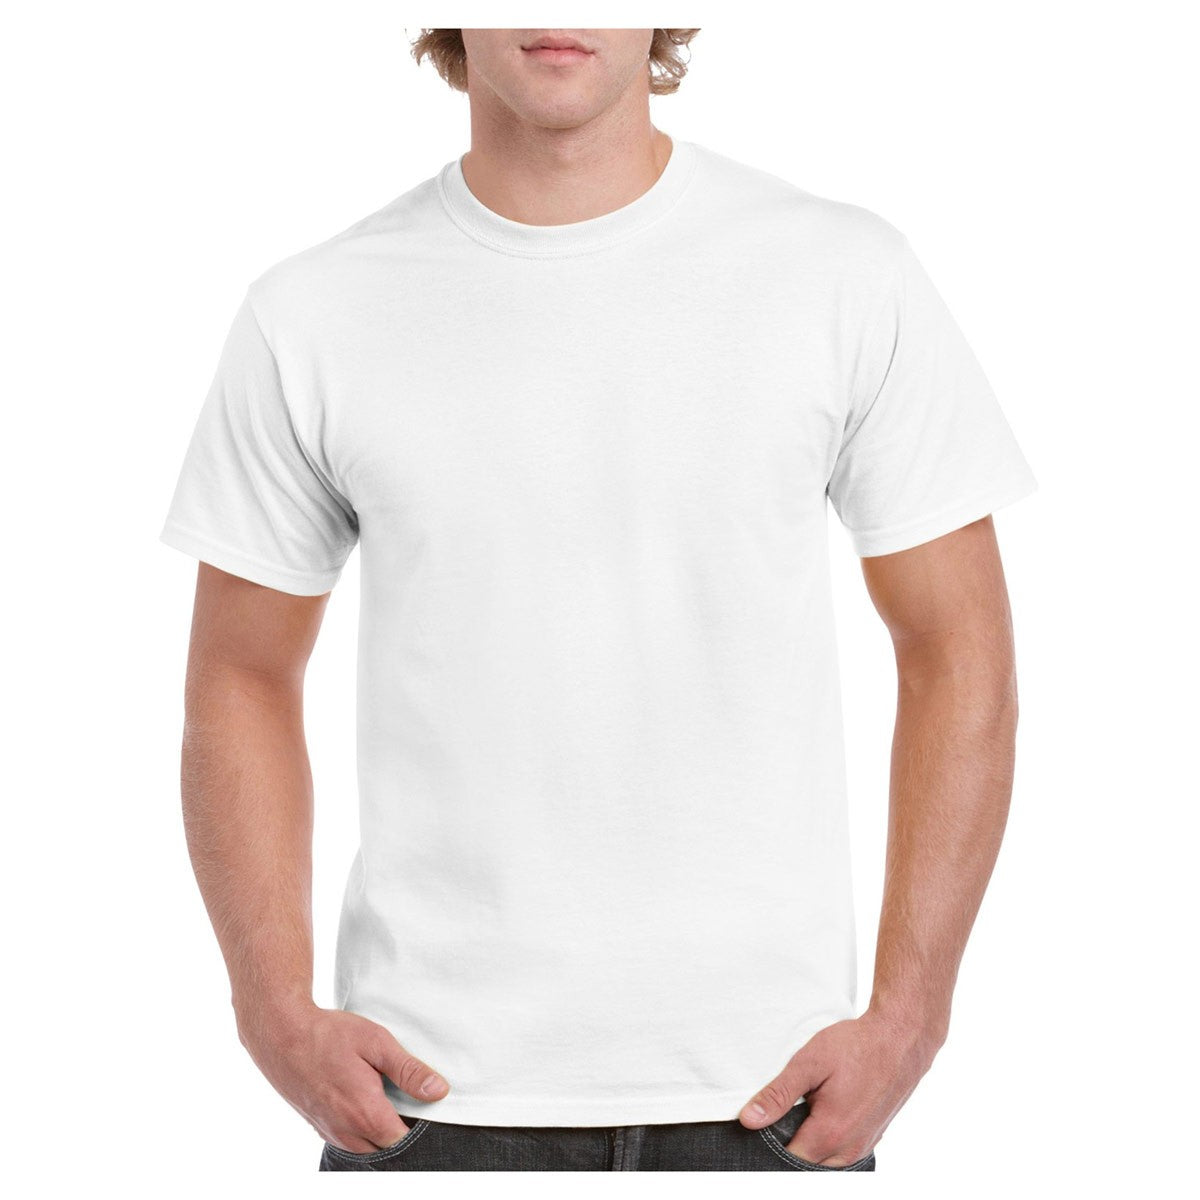 Unisex V-Neck White T-Shirt